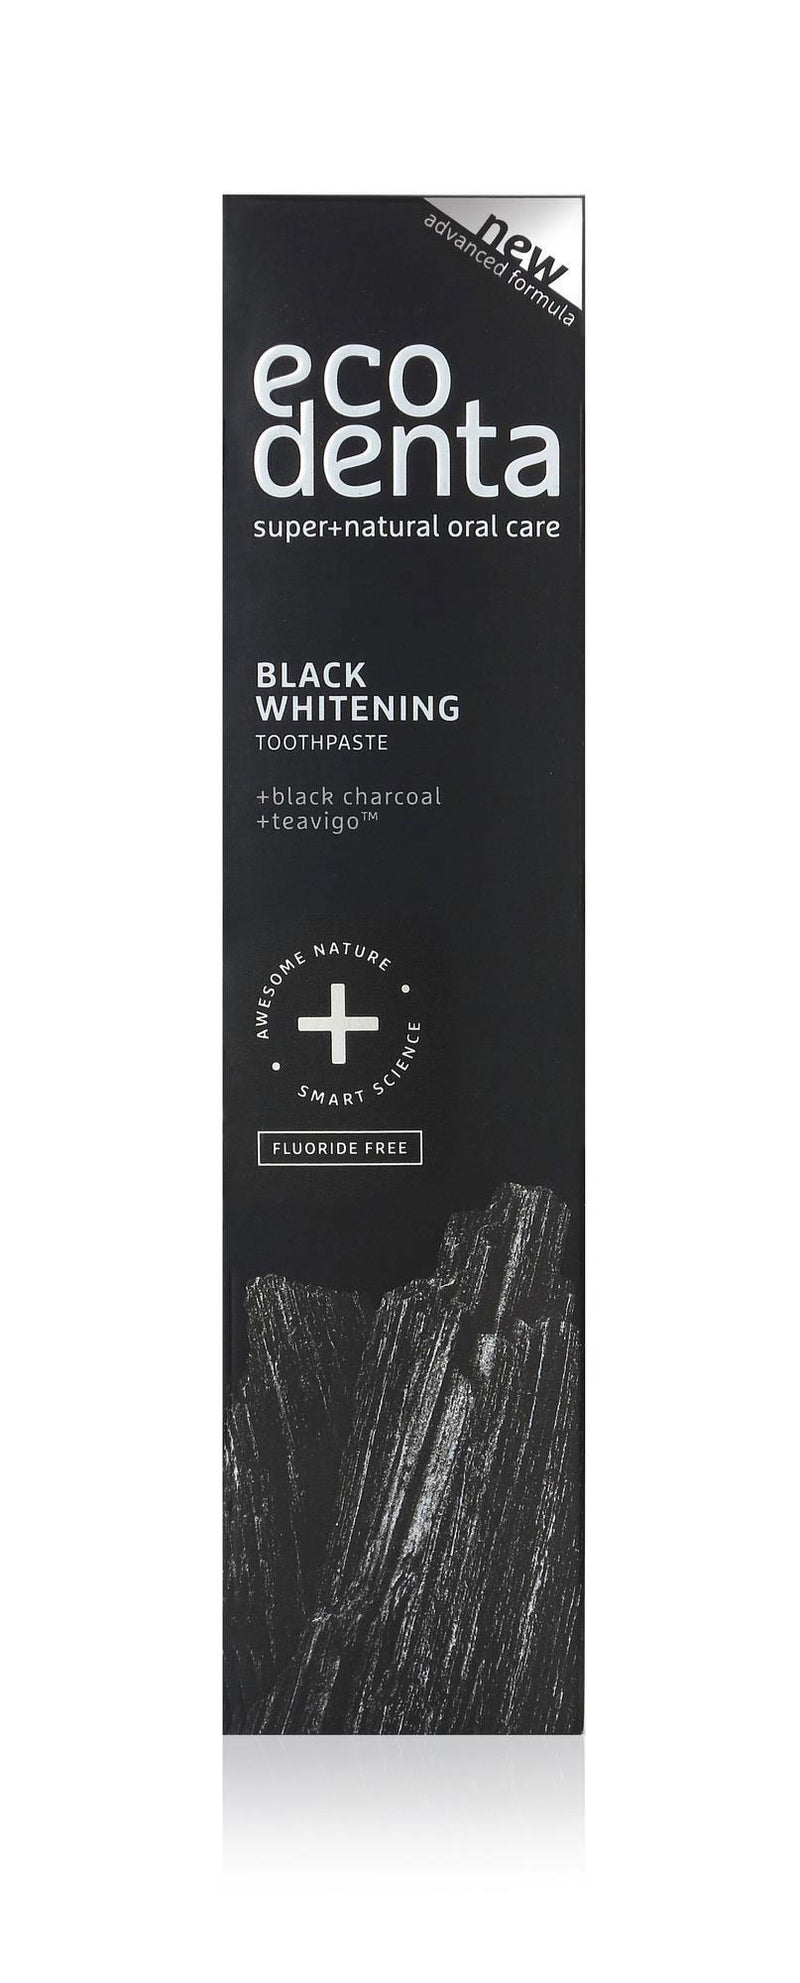 eco denta - Black Charcoal Whitening Toothpaste (100Ml) 98% Organic (β)